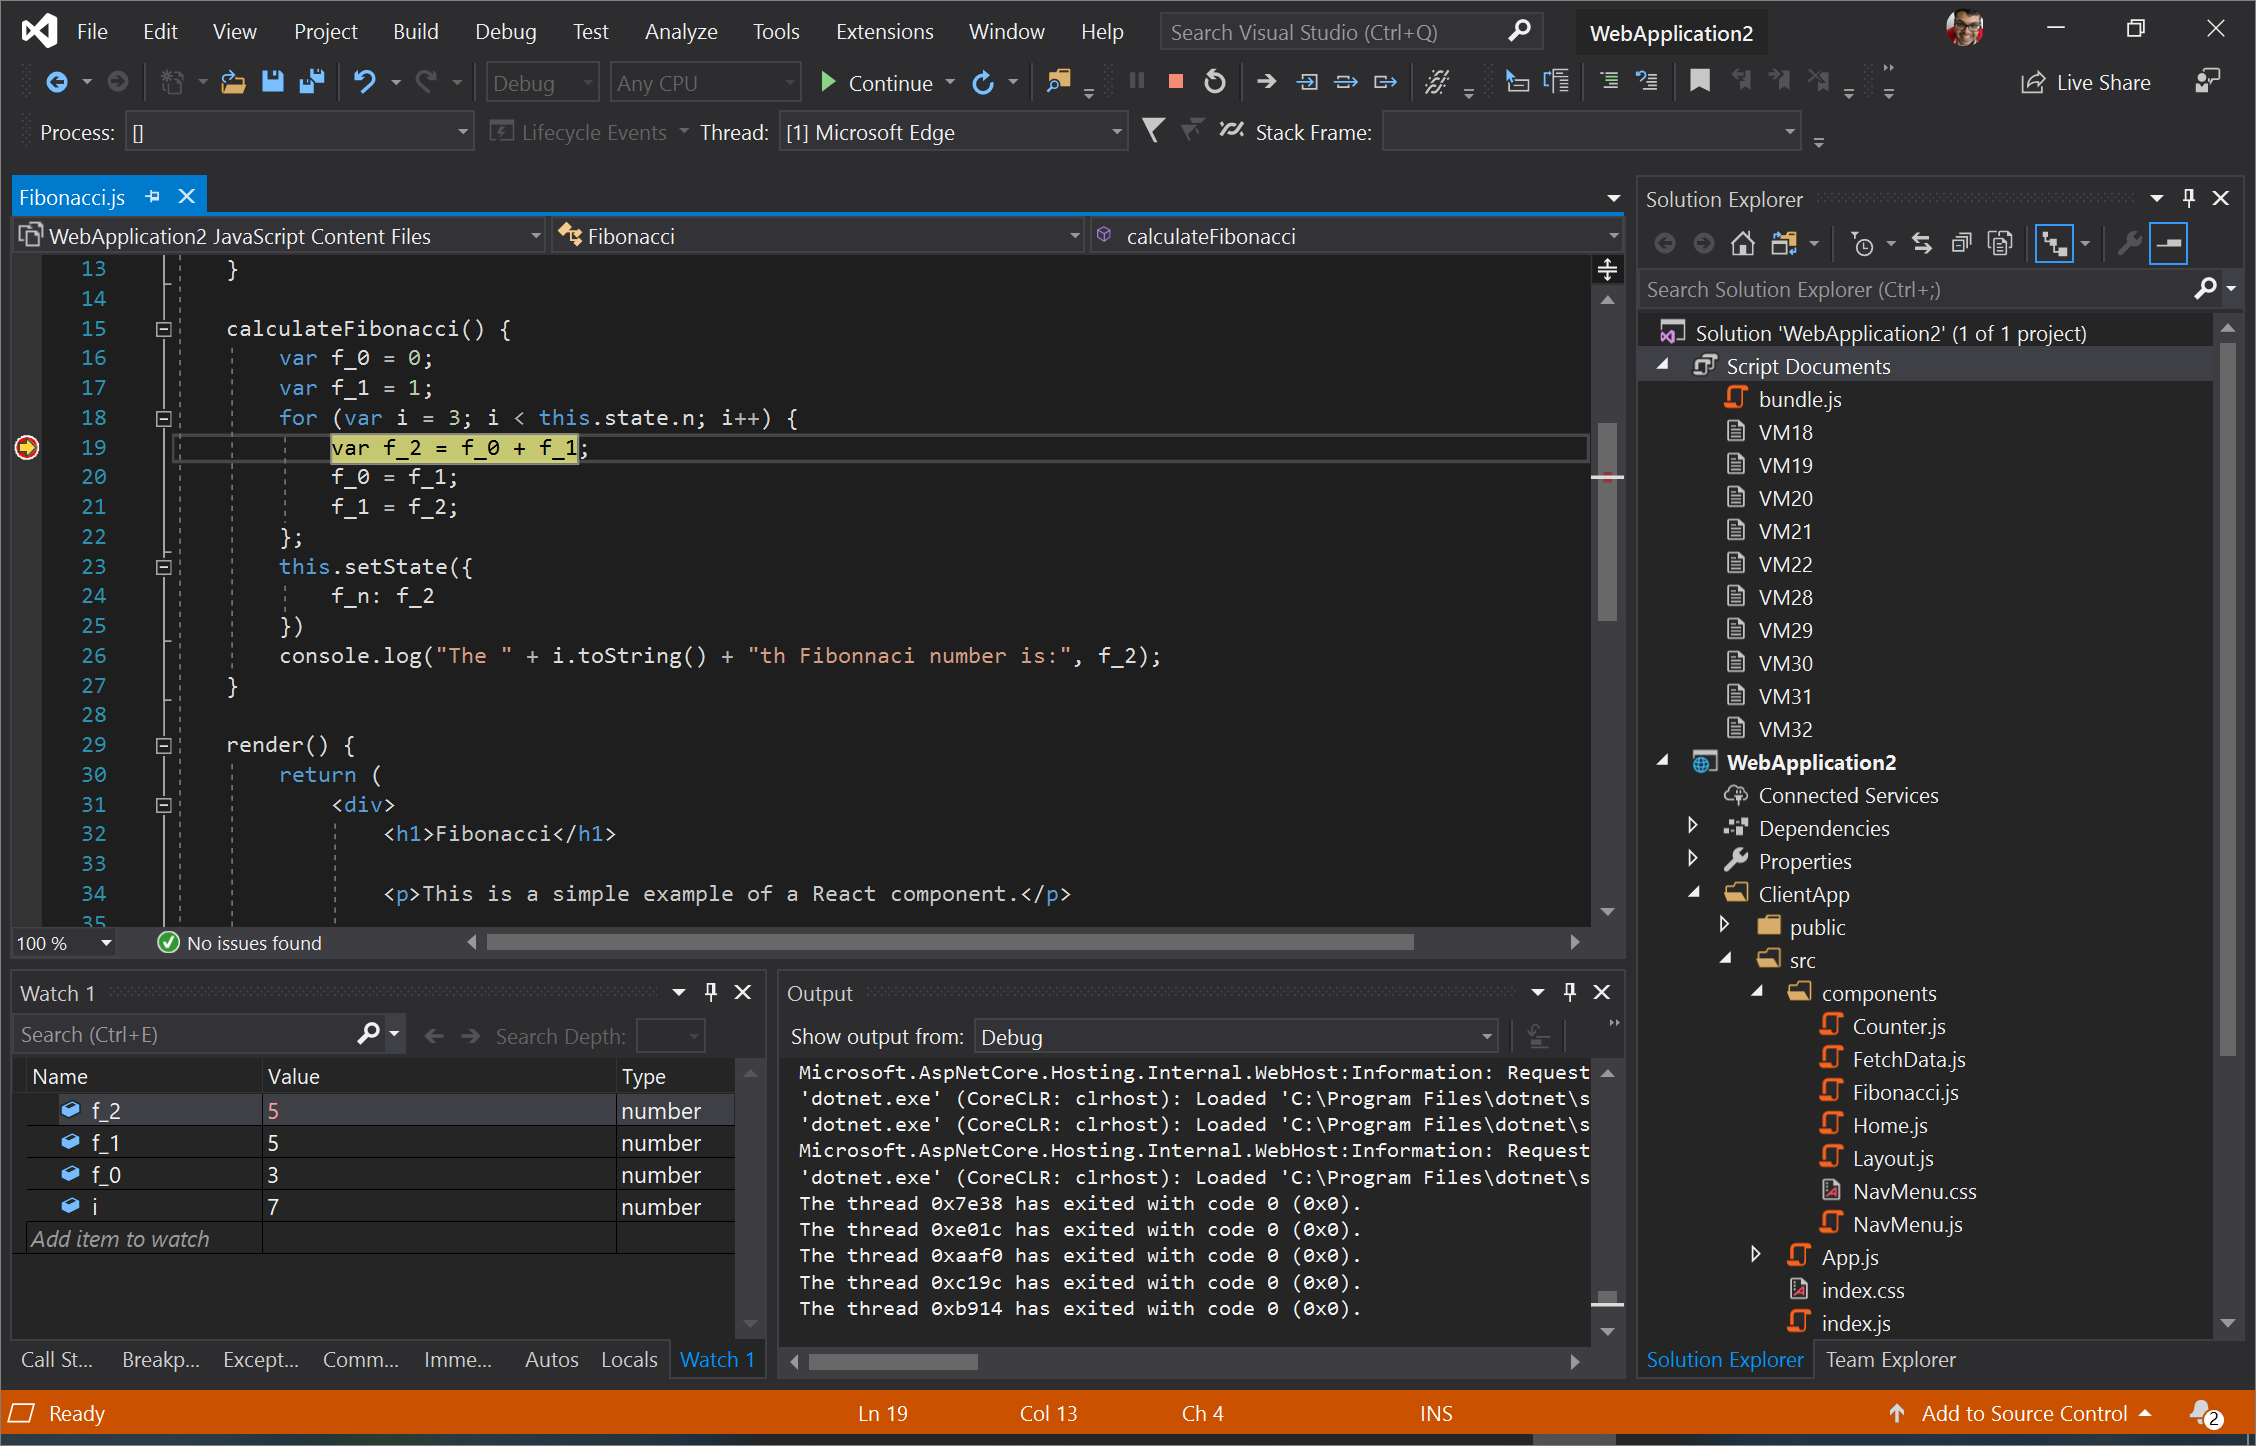 A screenshot of Visual Studio, breaking on line 19 in Fibonacci.js when i is 7